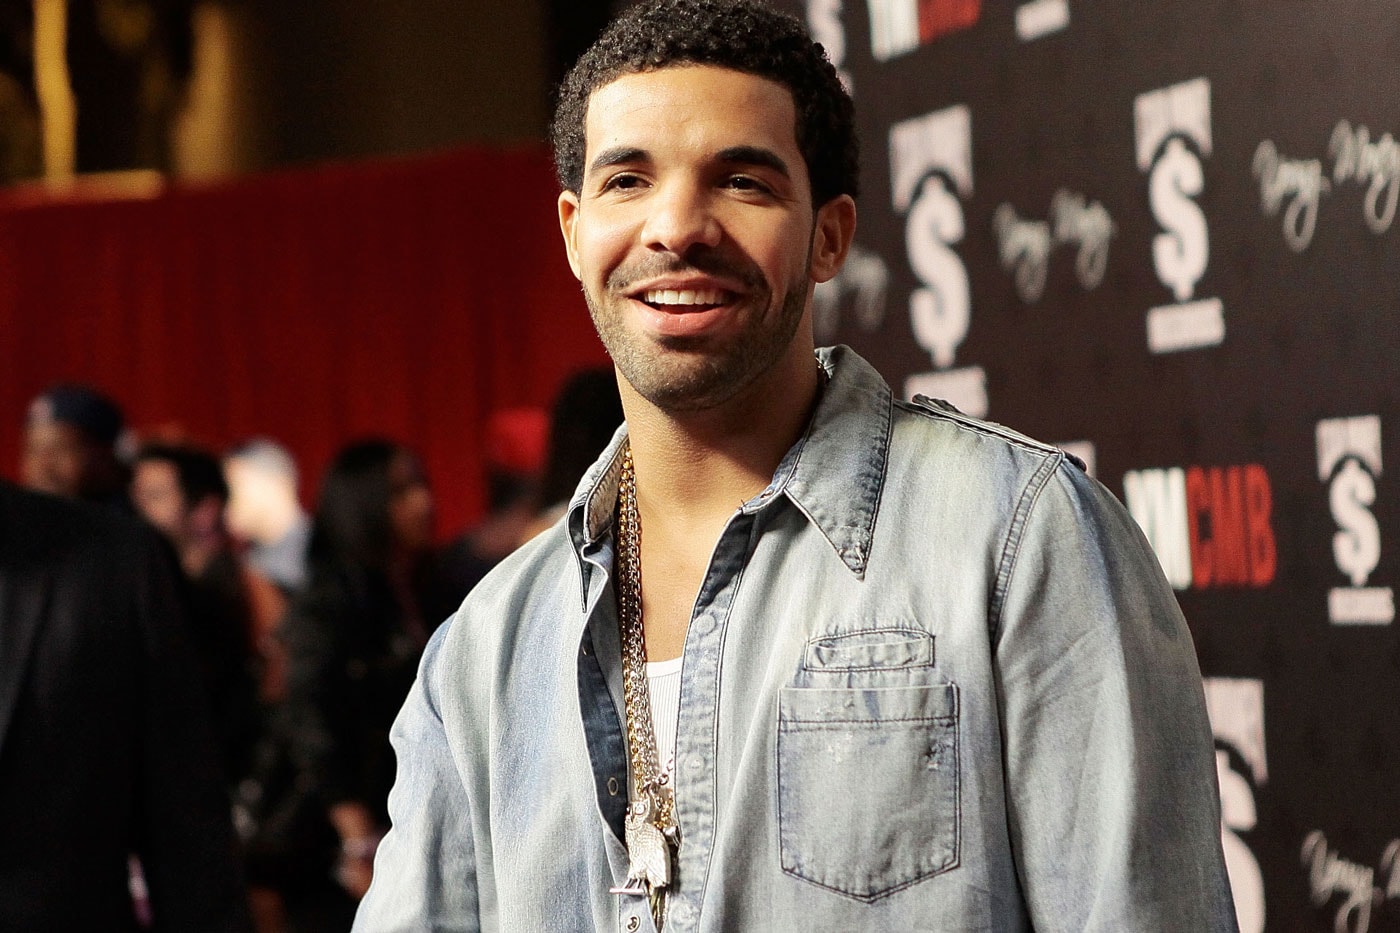 Drake Take Care Album Billboard 200 Six Years